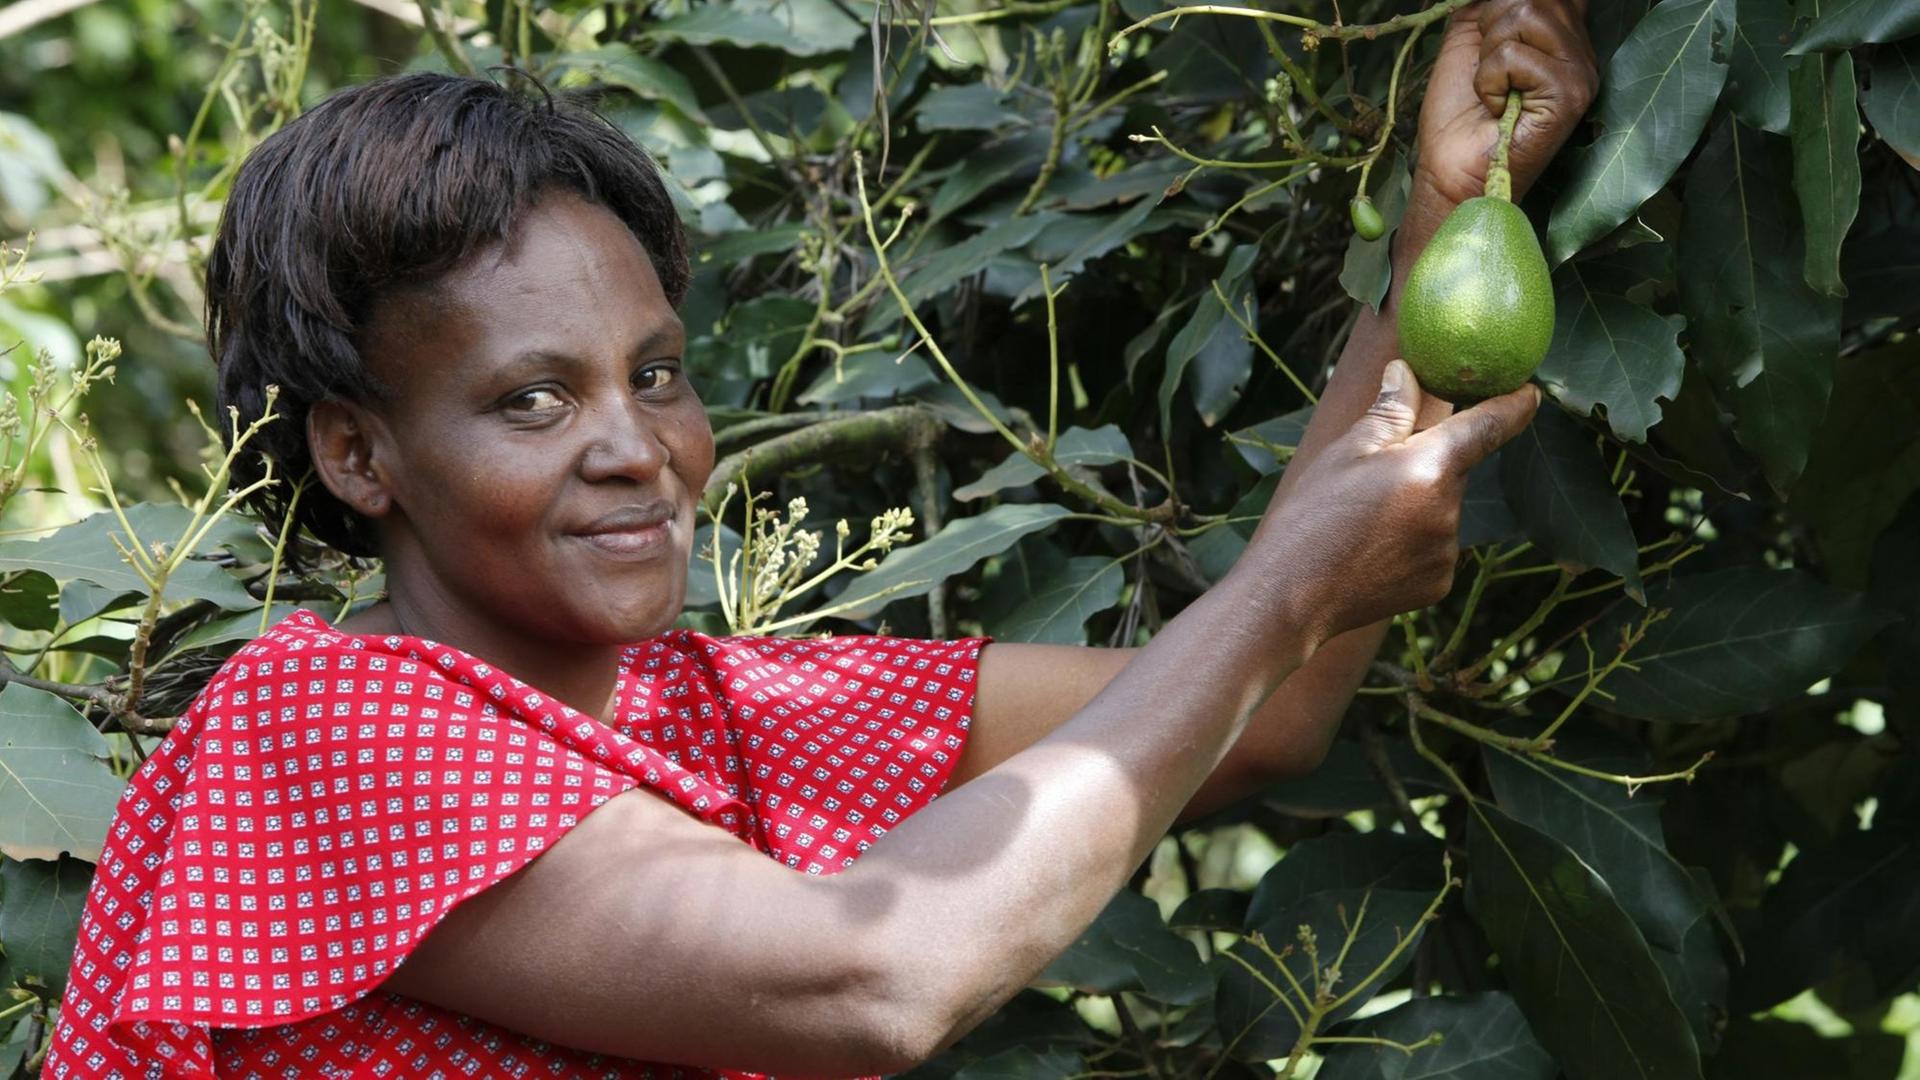 Eine Frau in Kenia pflügt eine Avocado.